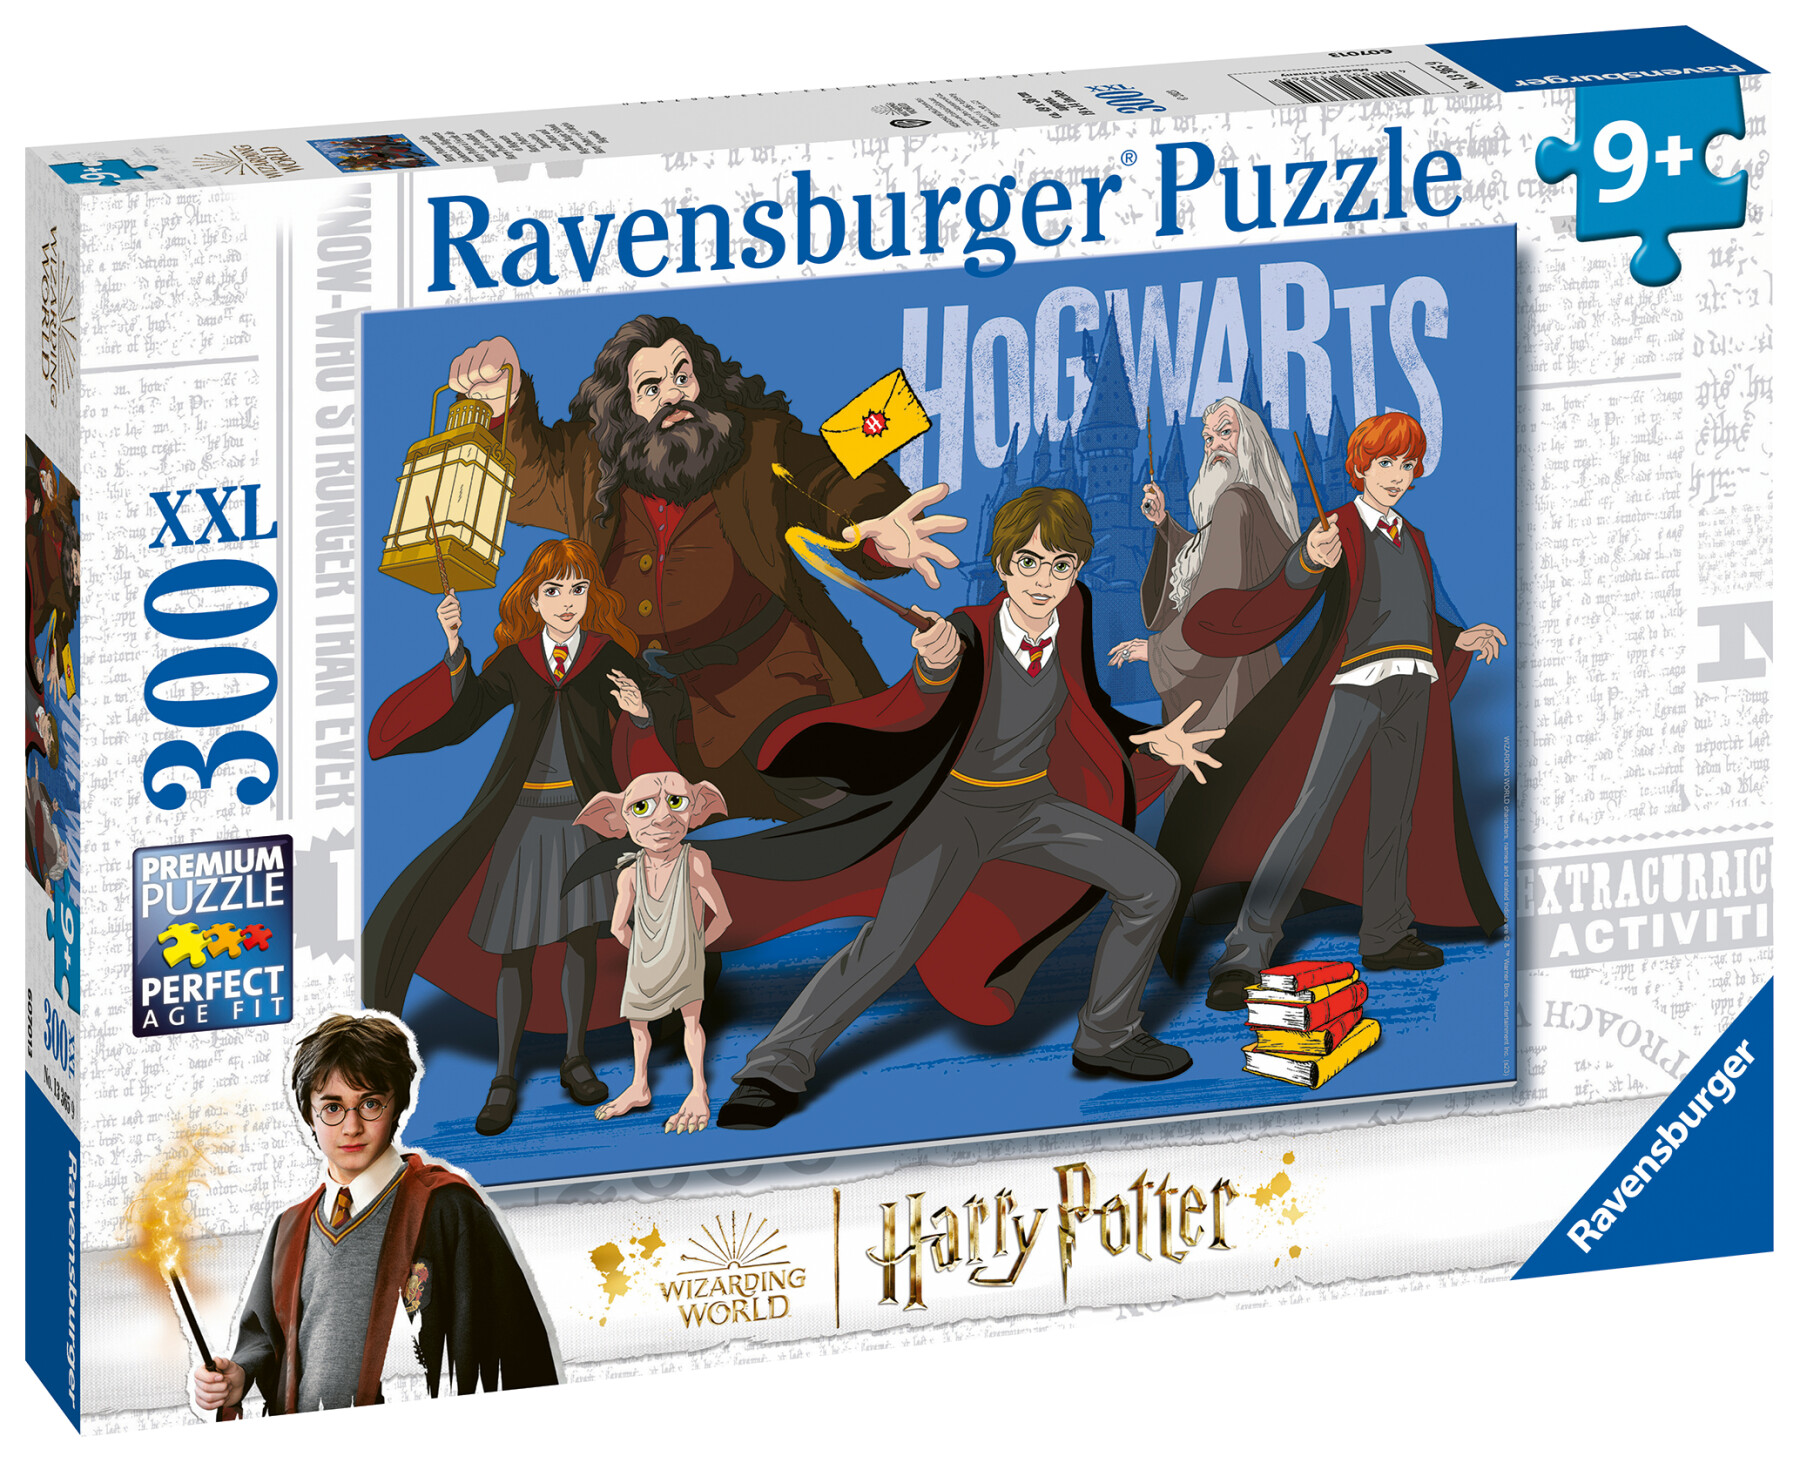 Ravensburger - puzzle harry potter, 300 pezzi xxl, età raccomandata 9+ anni - Harry Potter, RAVENSBURGER